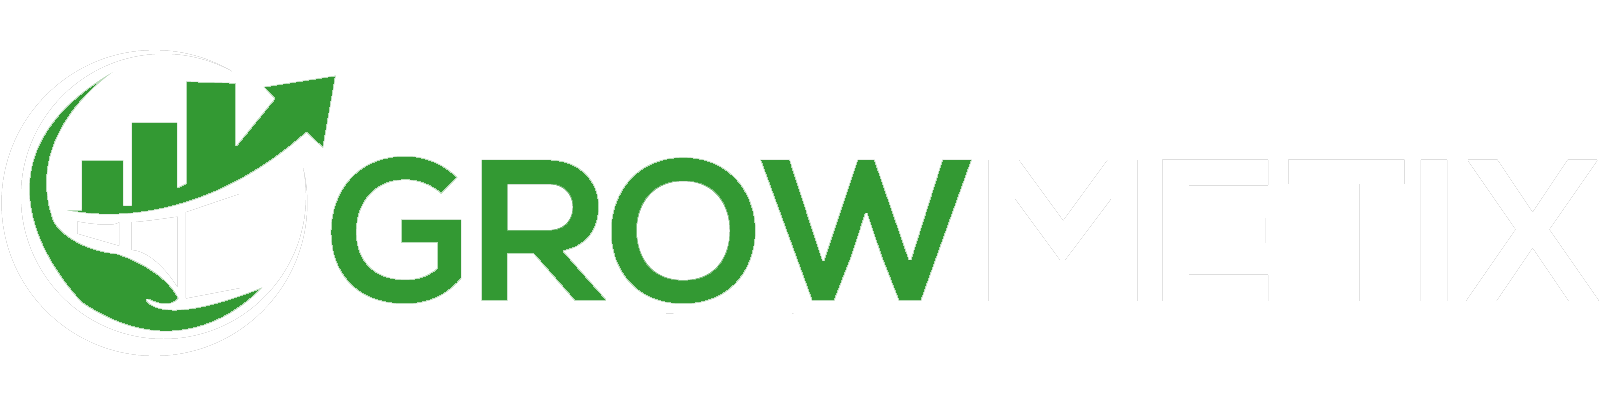 Growmetix Logo